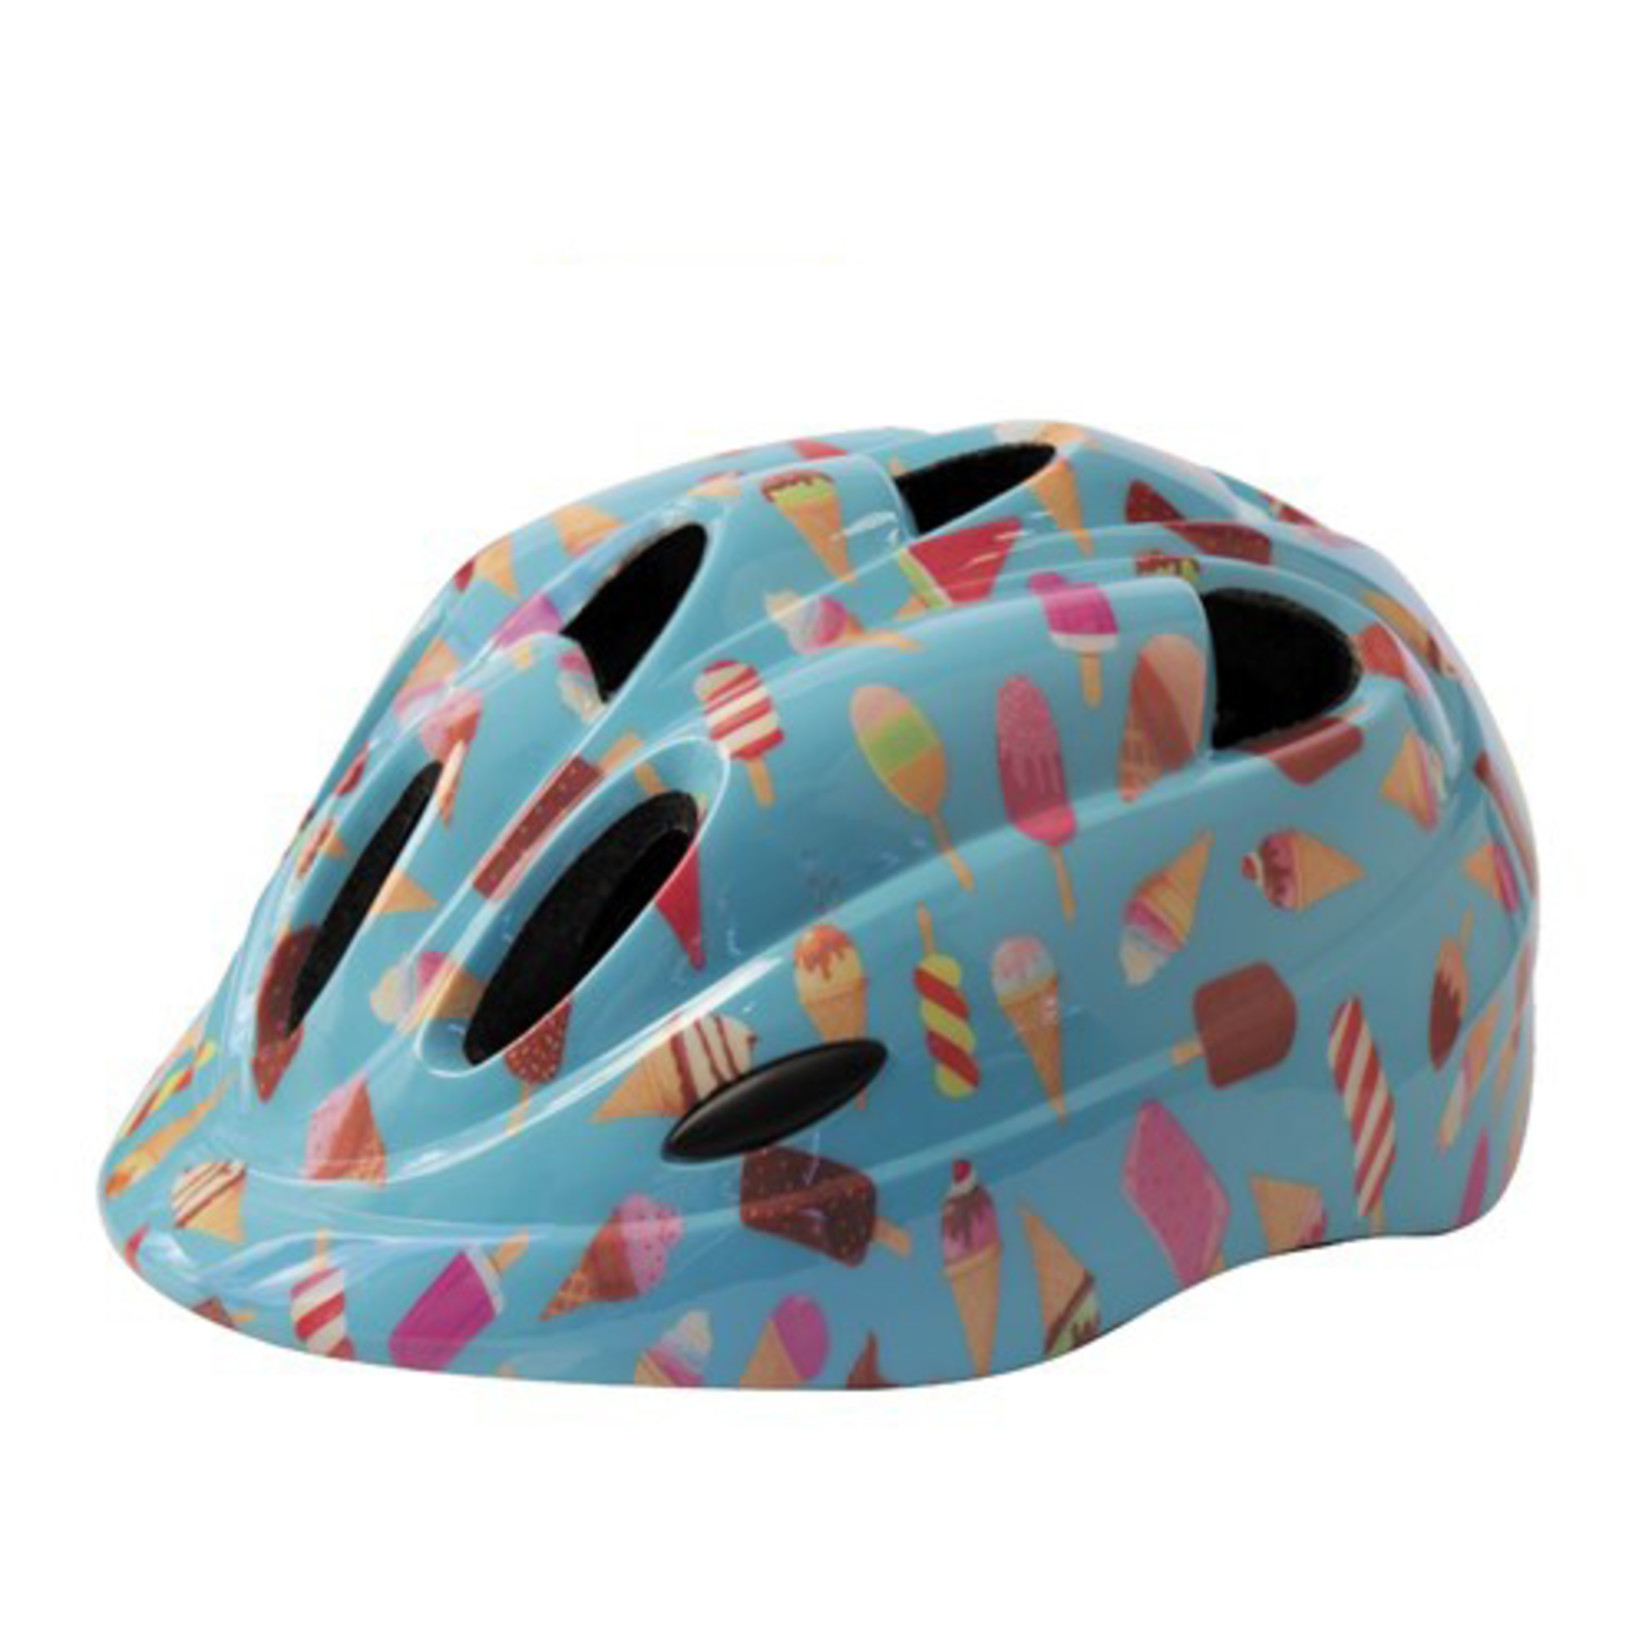 Azur Azur Bike Helmet - J36 Series - Icecream - 50-54cm Small - "Special"